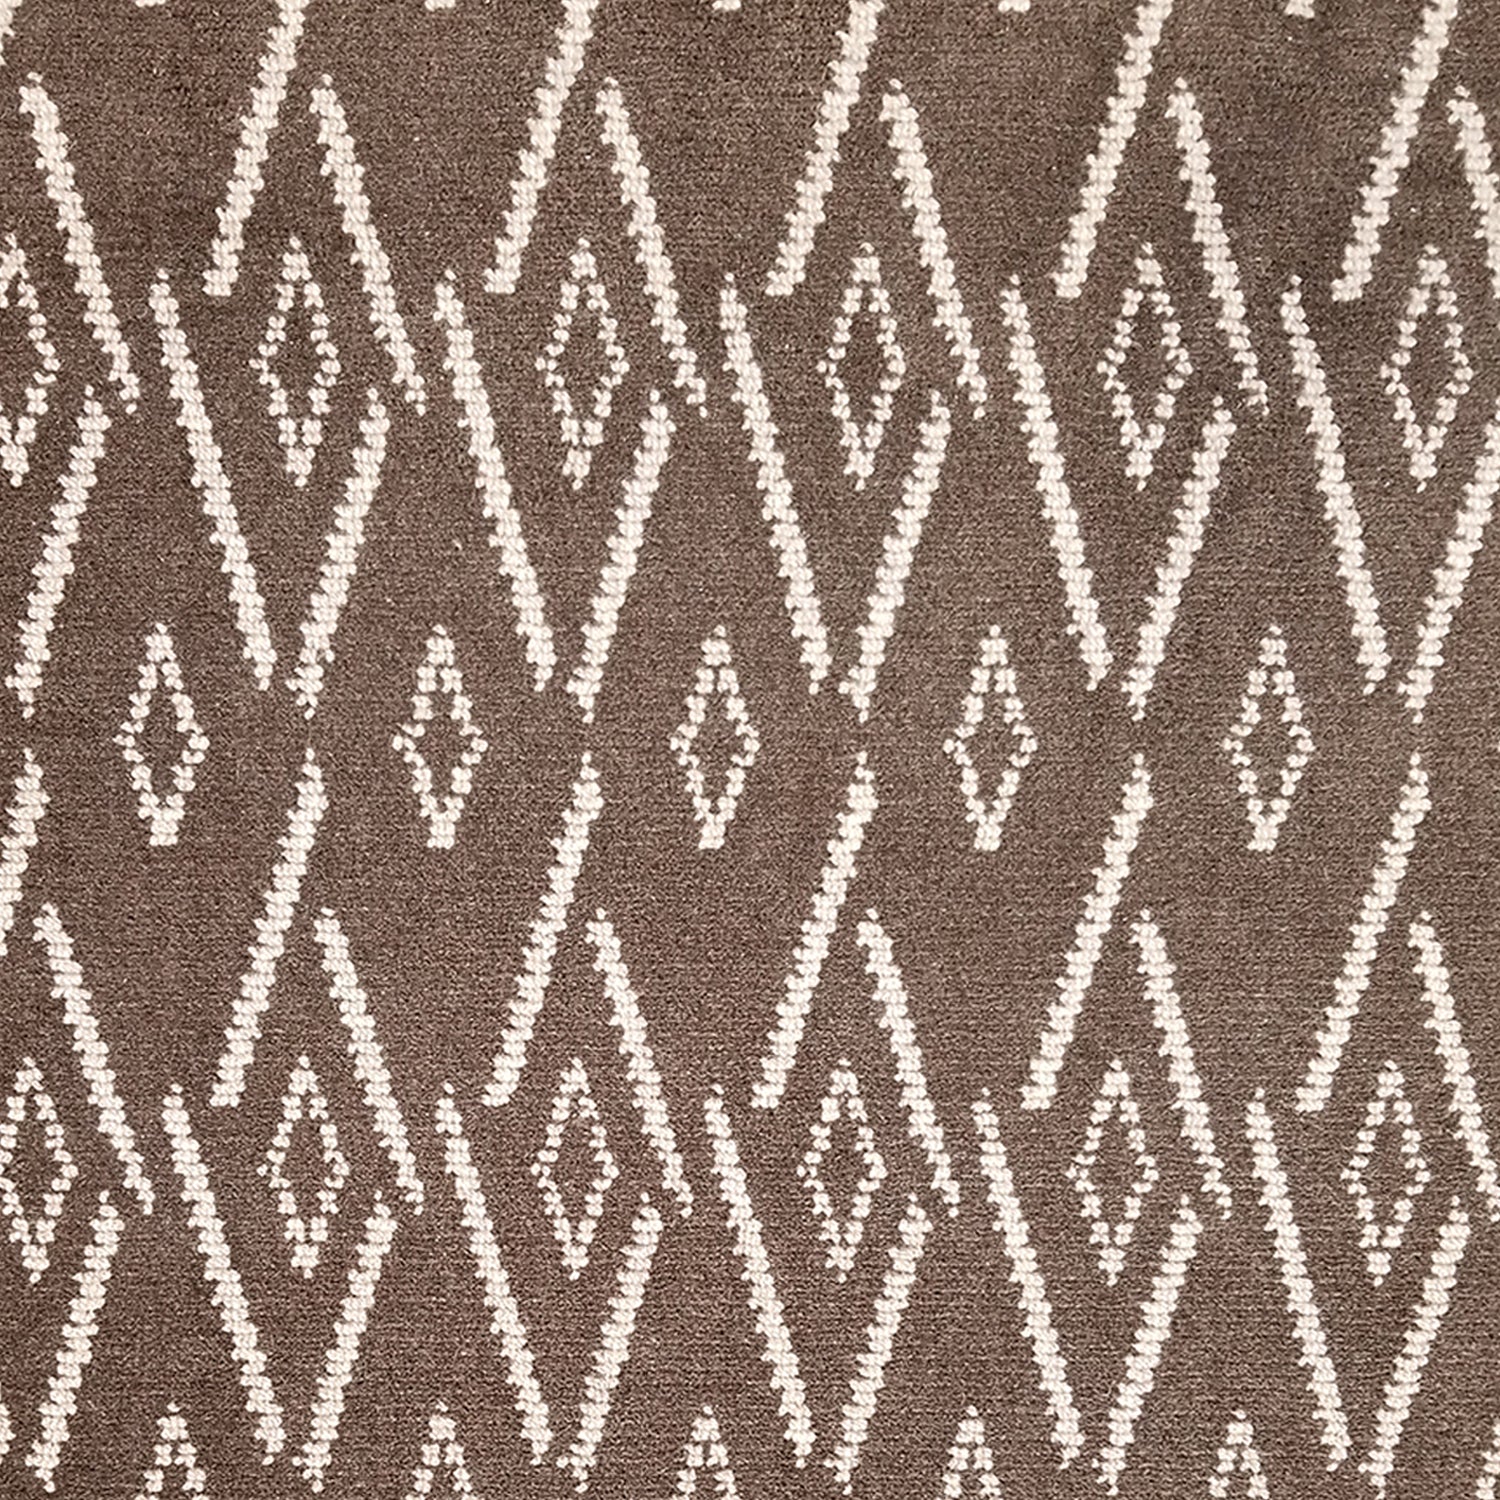 Woven broadloom carpet swatch in a repeating irregular diamond pattern in white on a dark brown field.